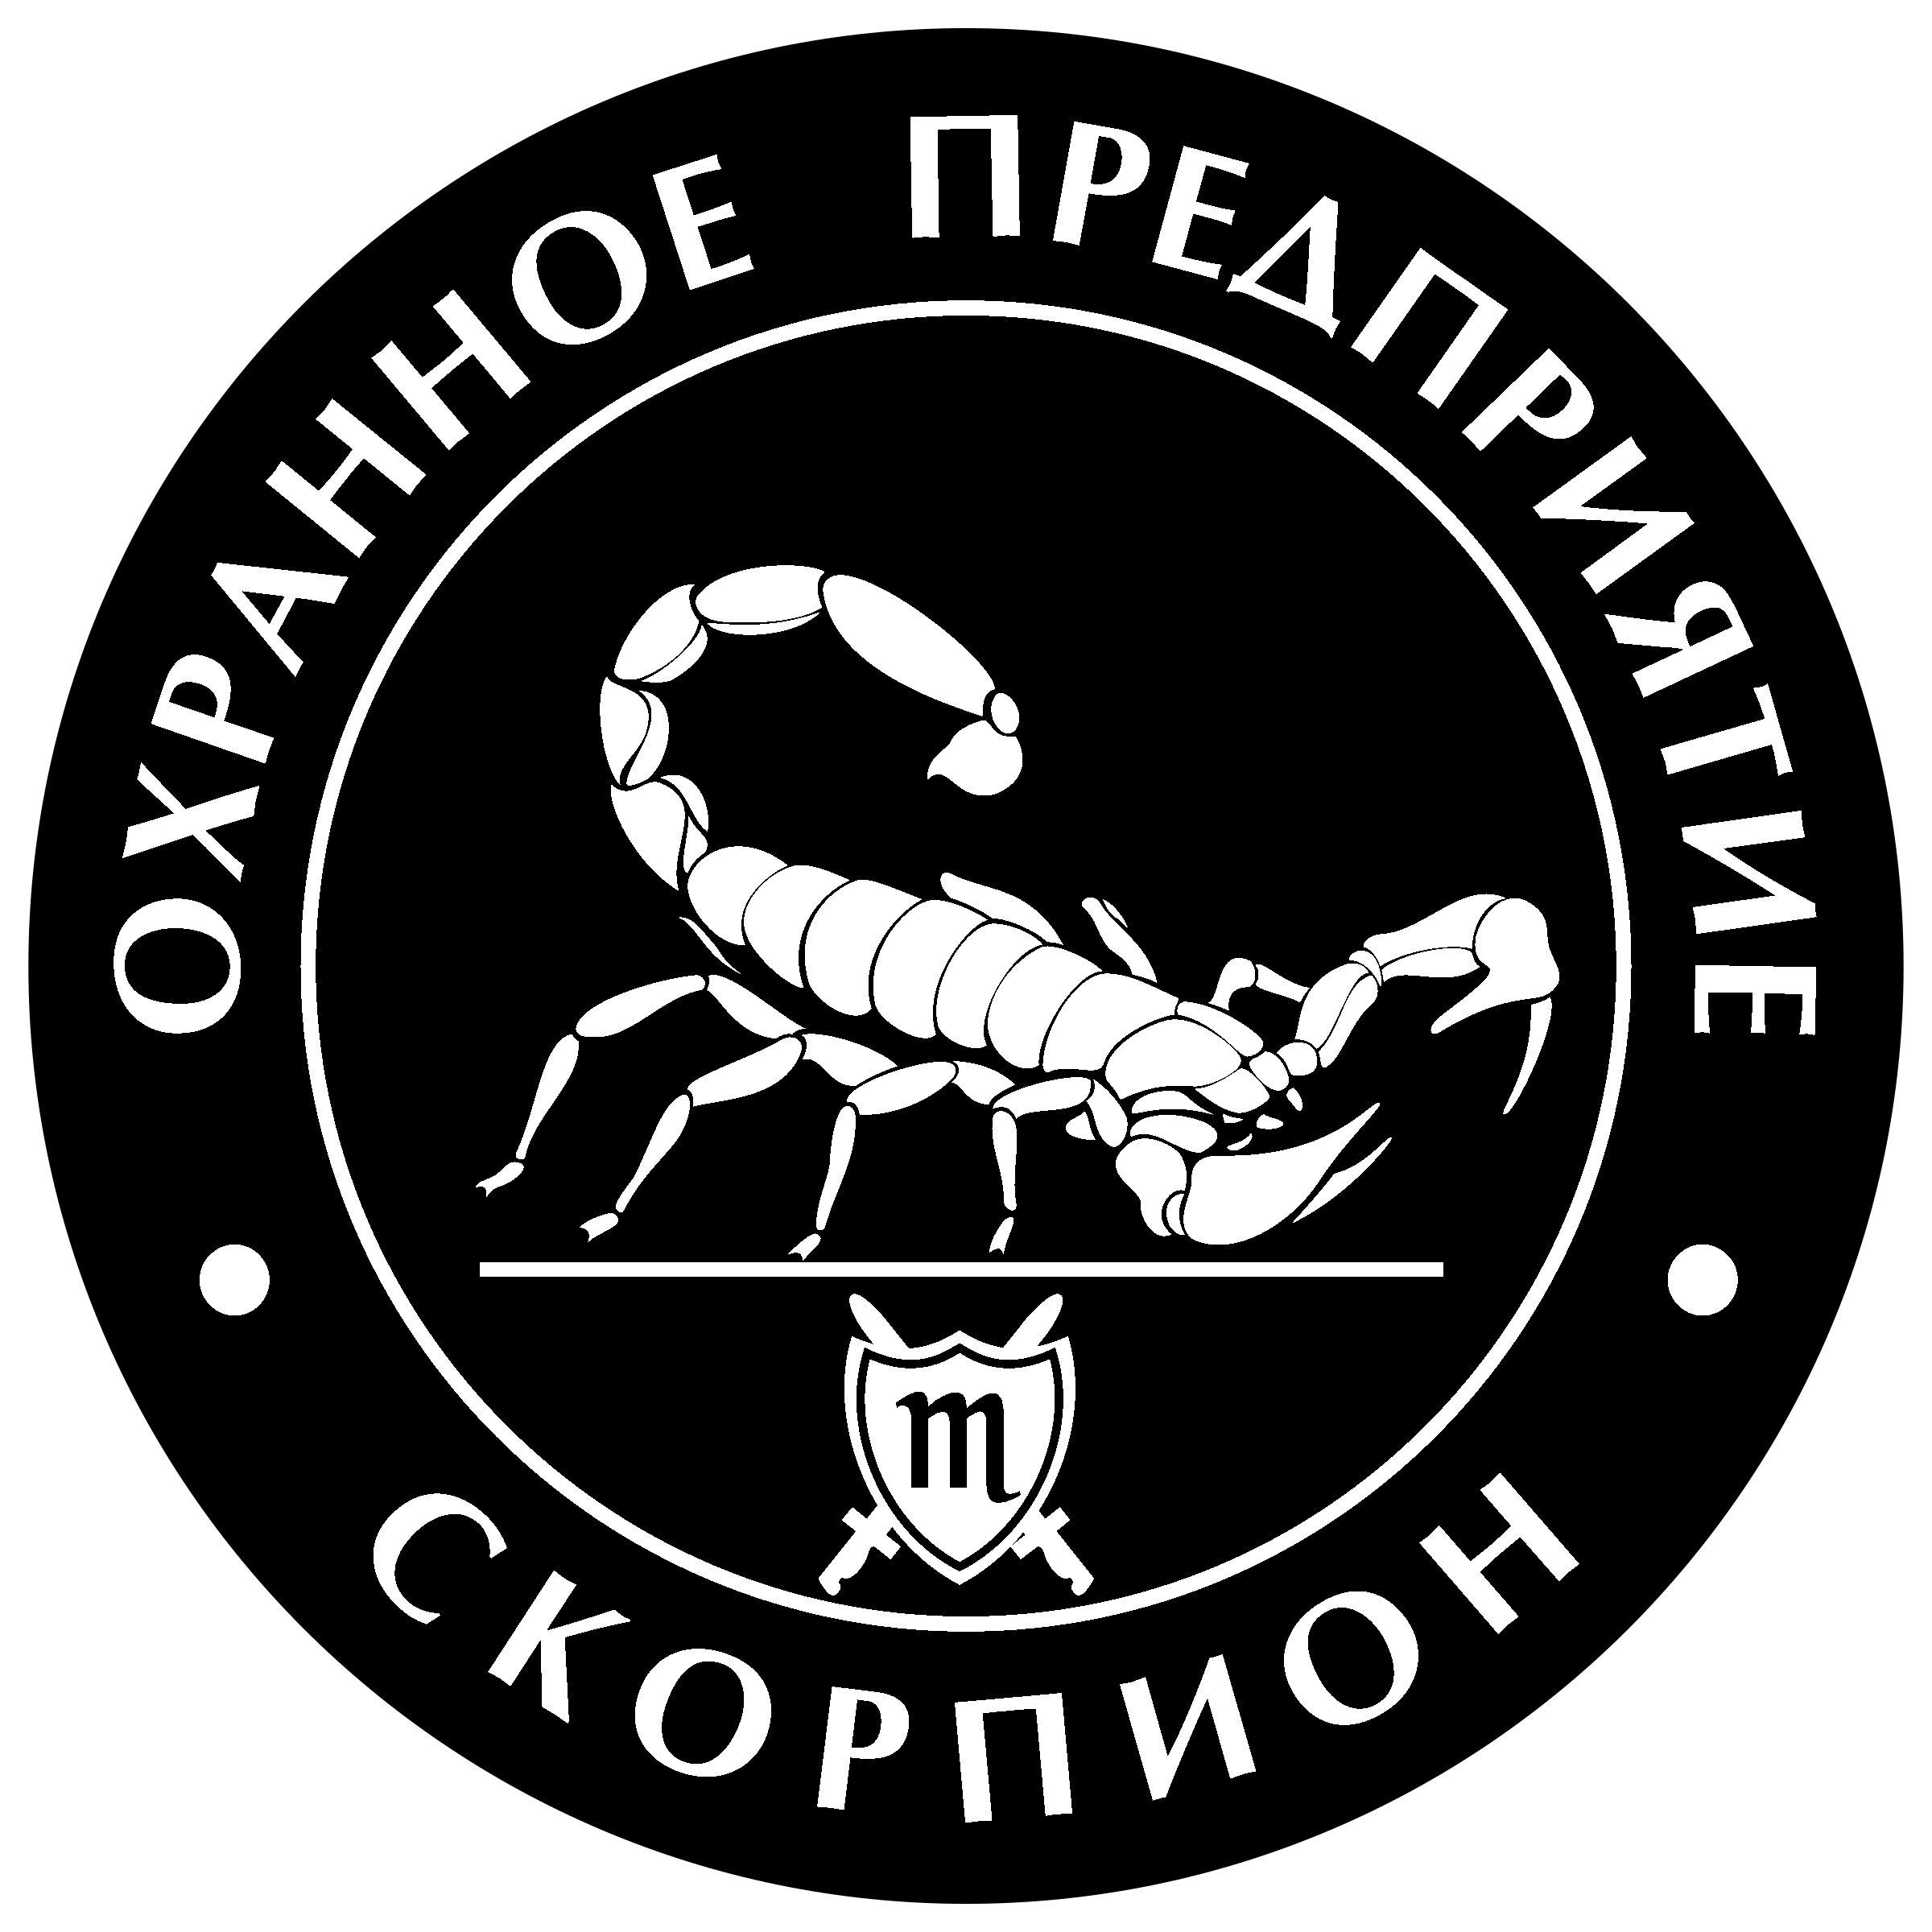 Scorpions PNG Transparent Image